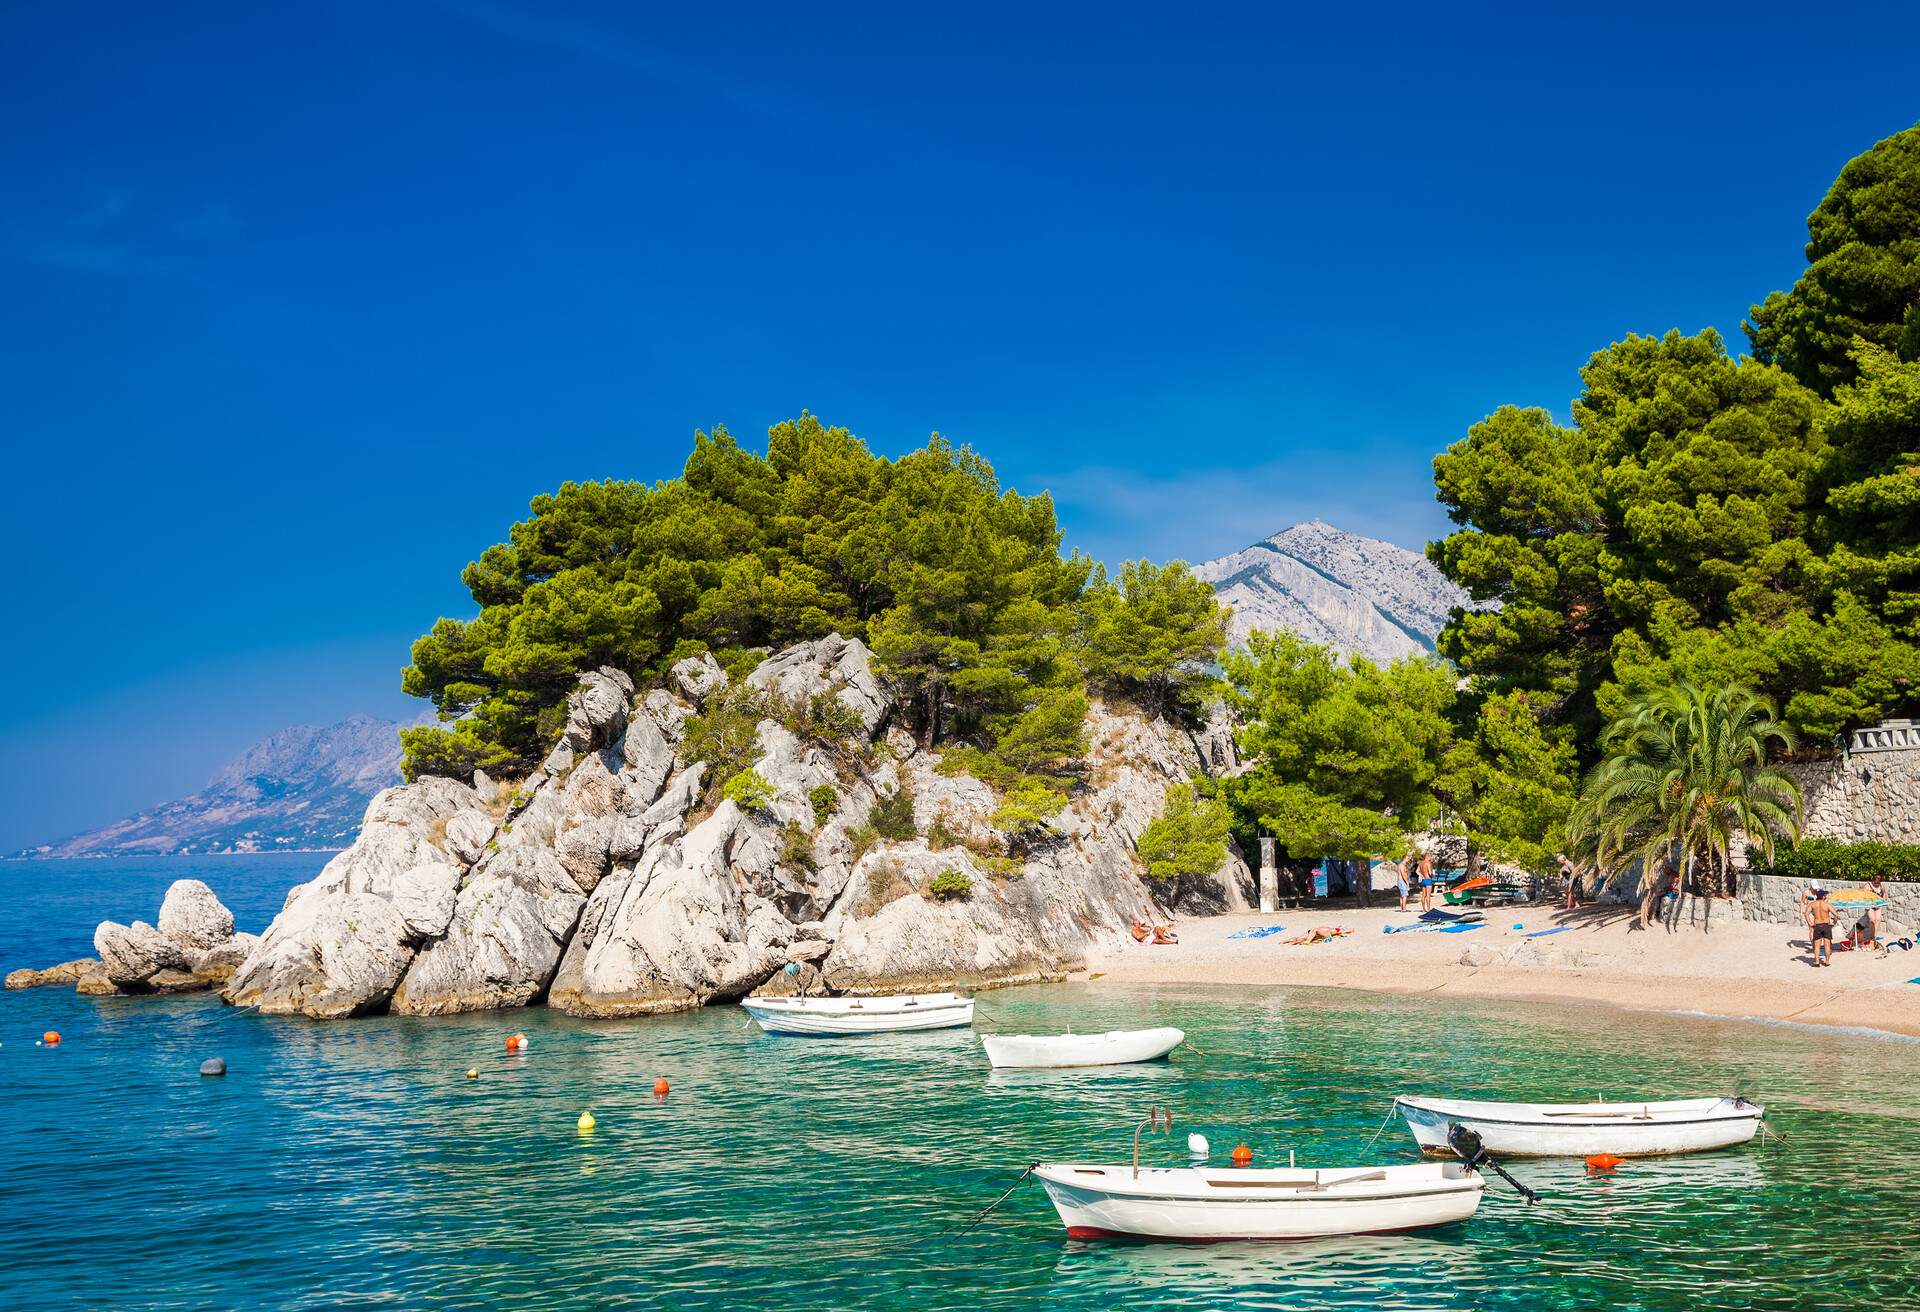 Podrace beach in Brela, Makarska Riviera, Croatia